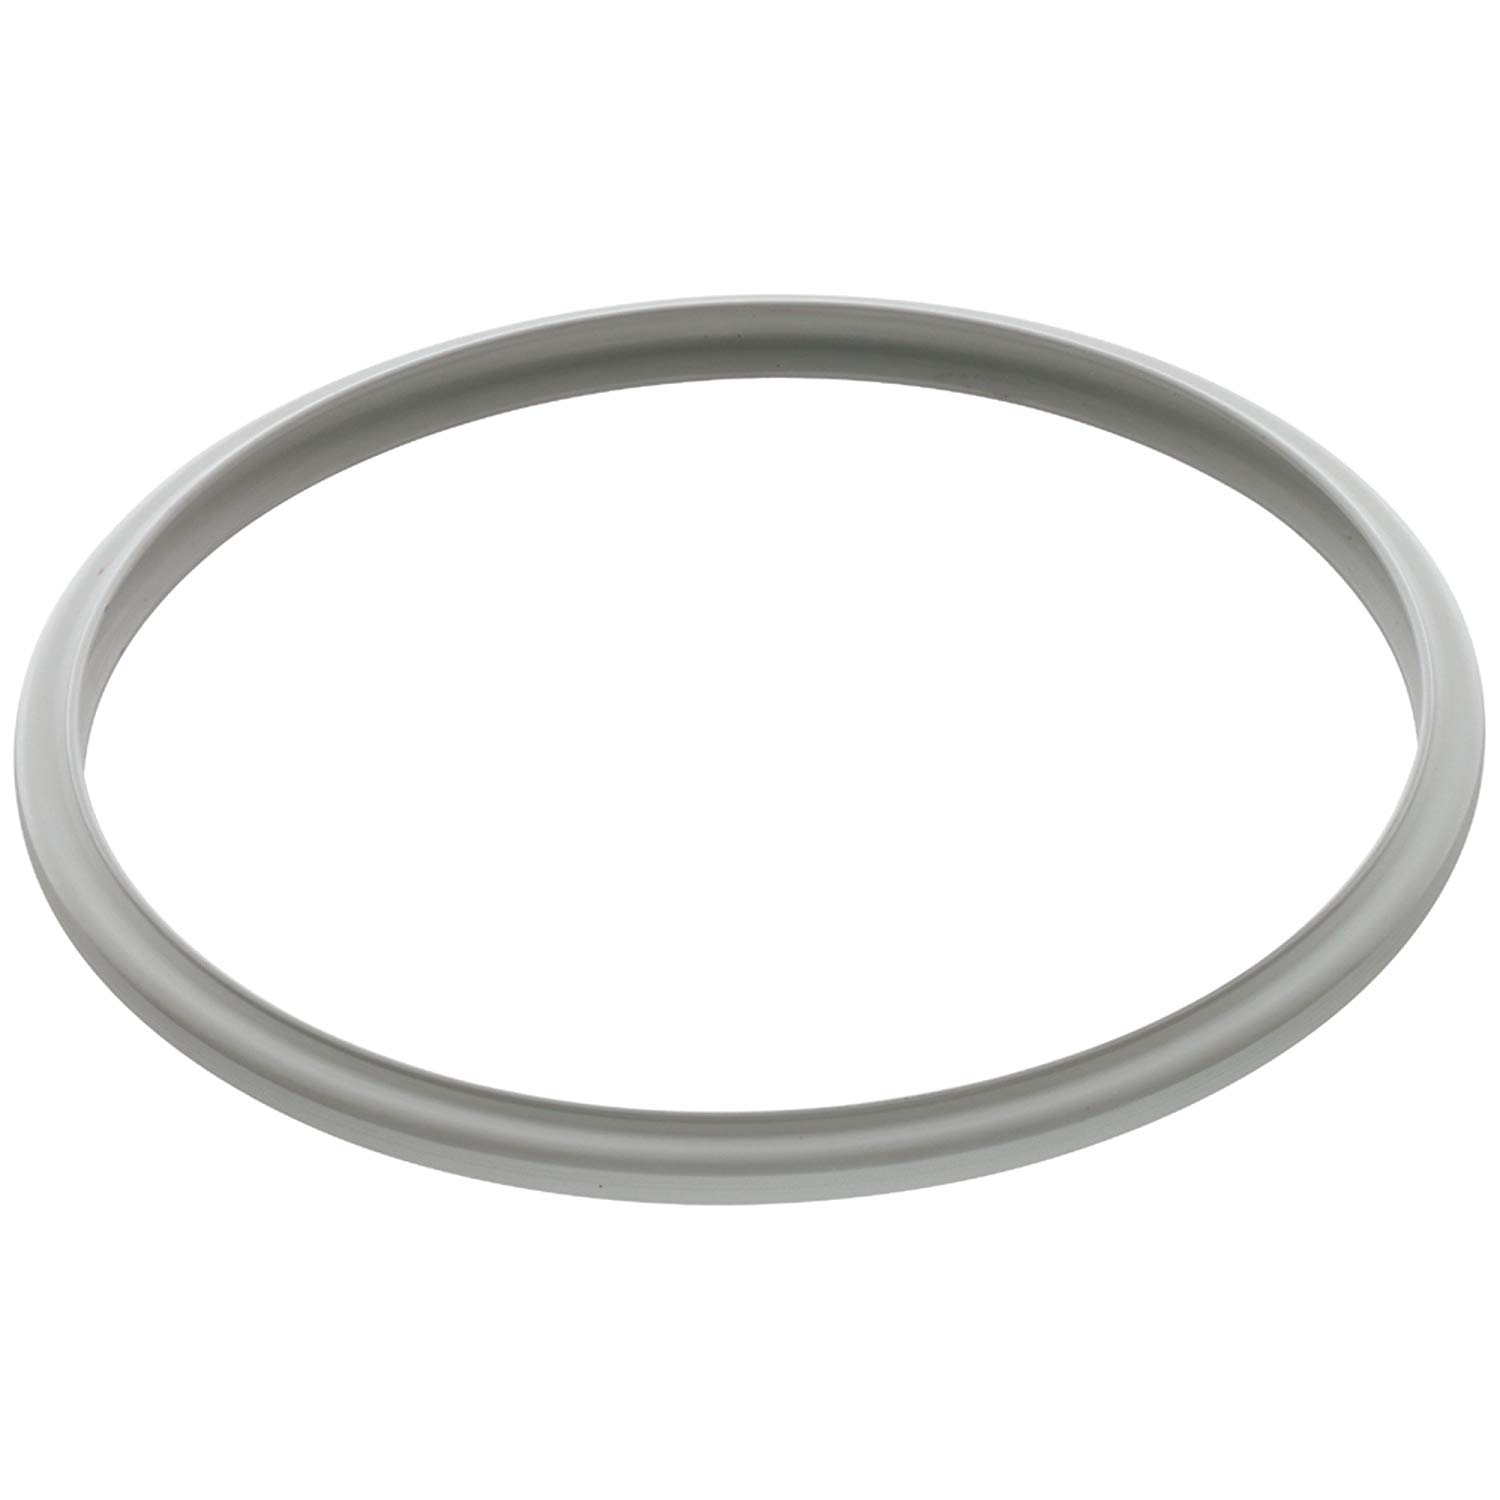 Wmf Pressure Cooker Sealing Ring (Gasket), 22 Cm